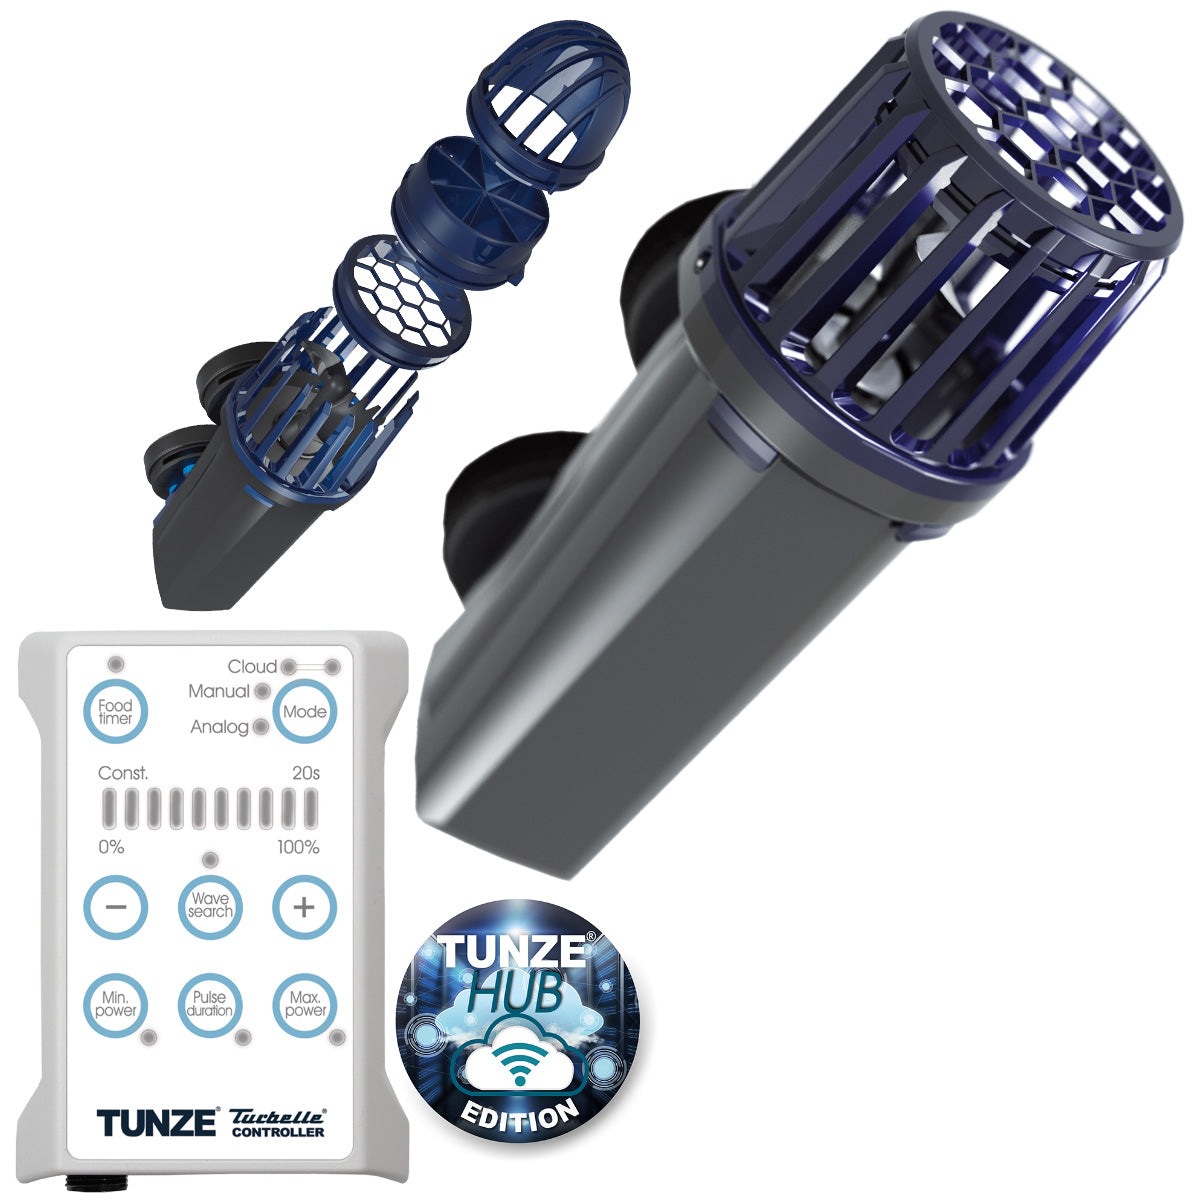 Tunze Turbelle stream 3 HUB Edition